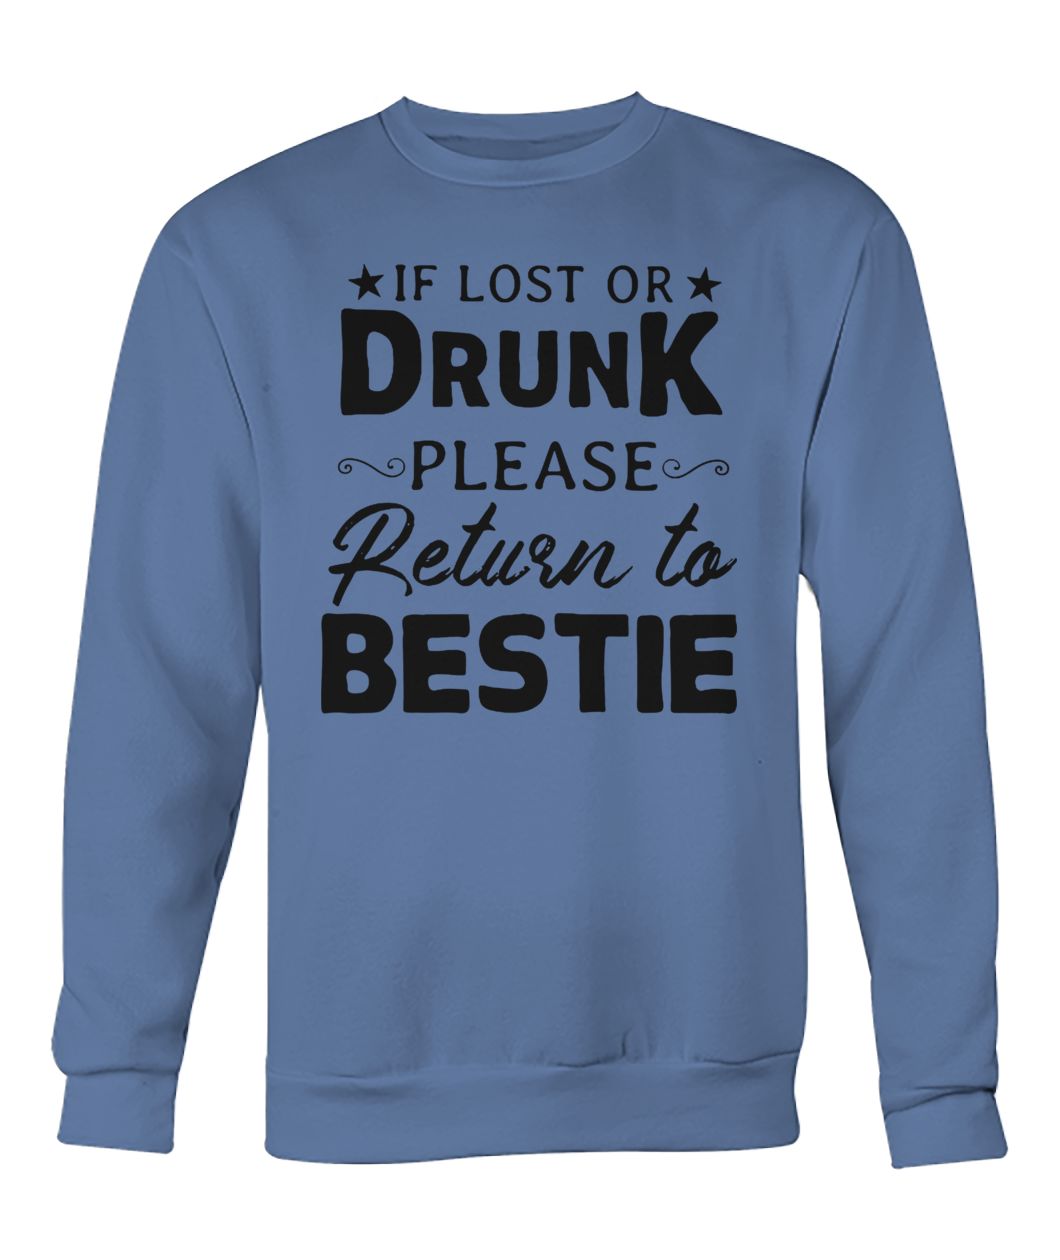 If lost or drunk please return to bestie crew neck sweatshirt